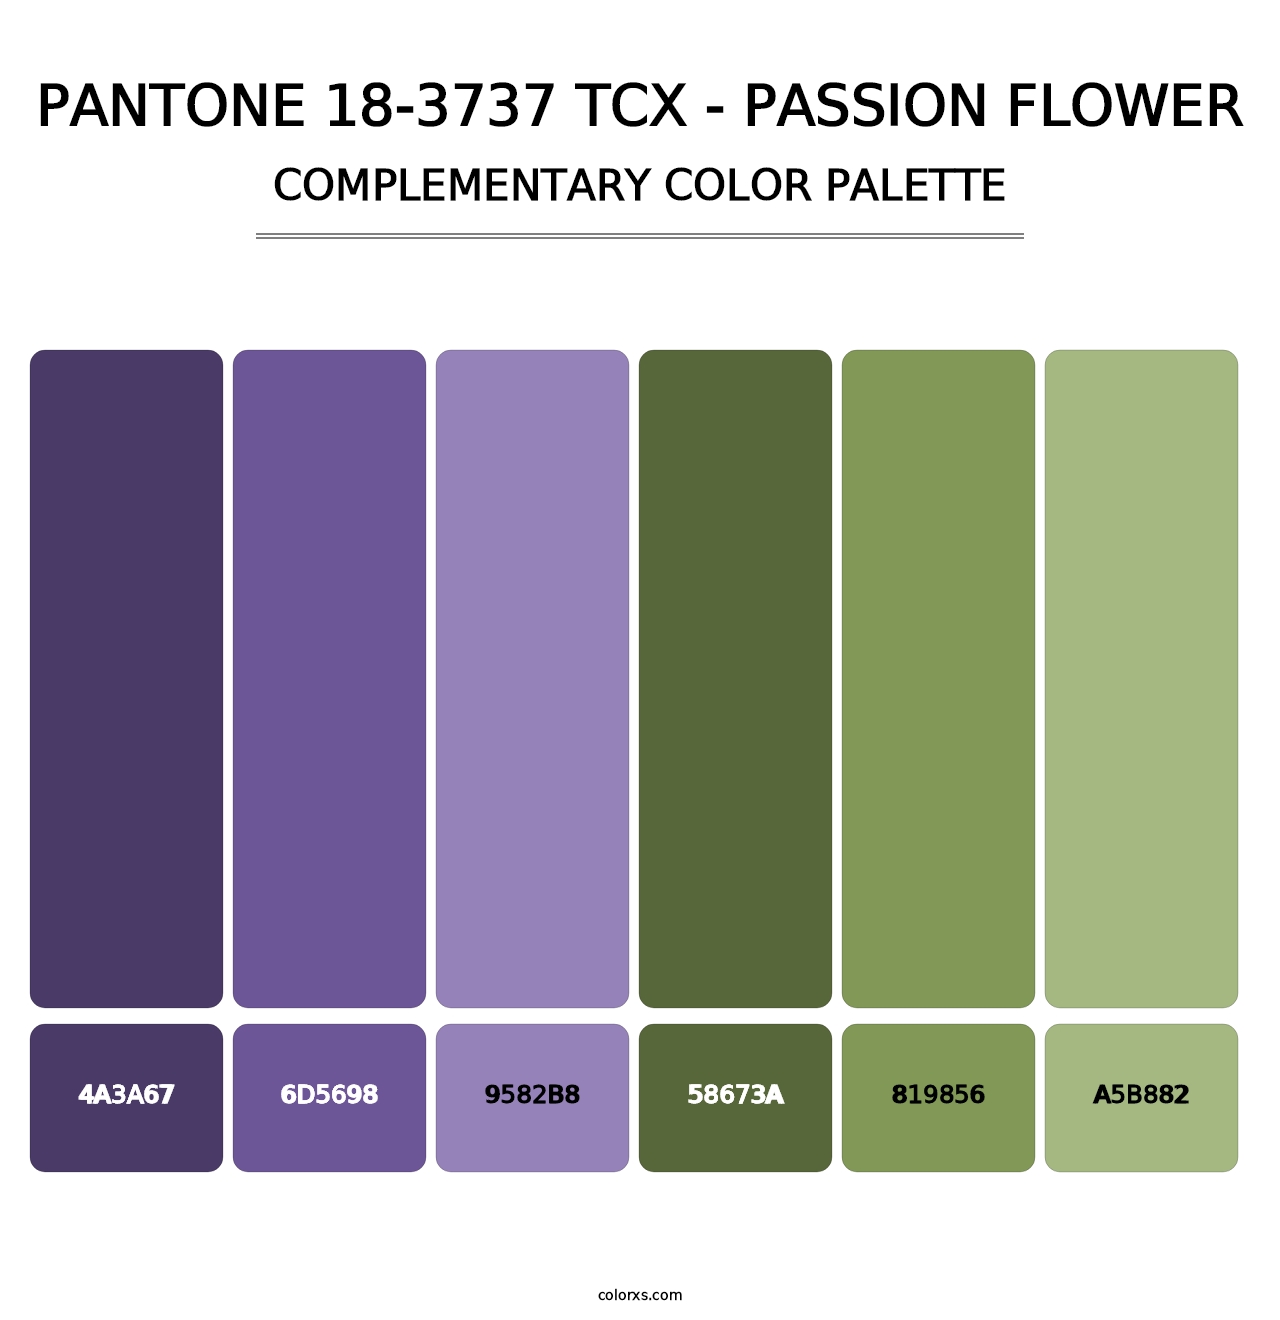 PANTONE 18-3737 TCX - Passion Flower - Complementary Color Palette